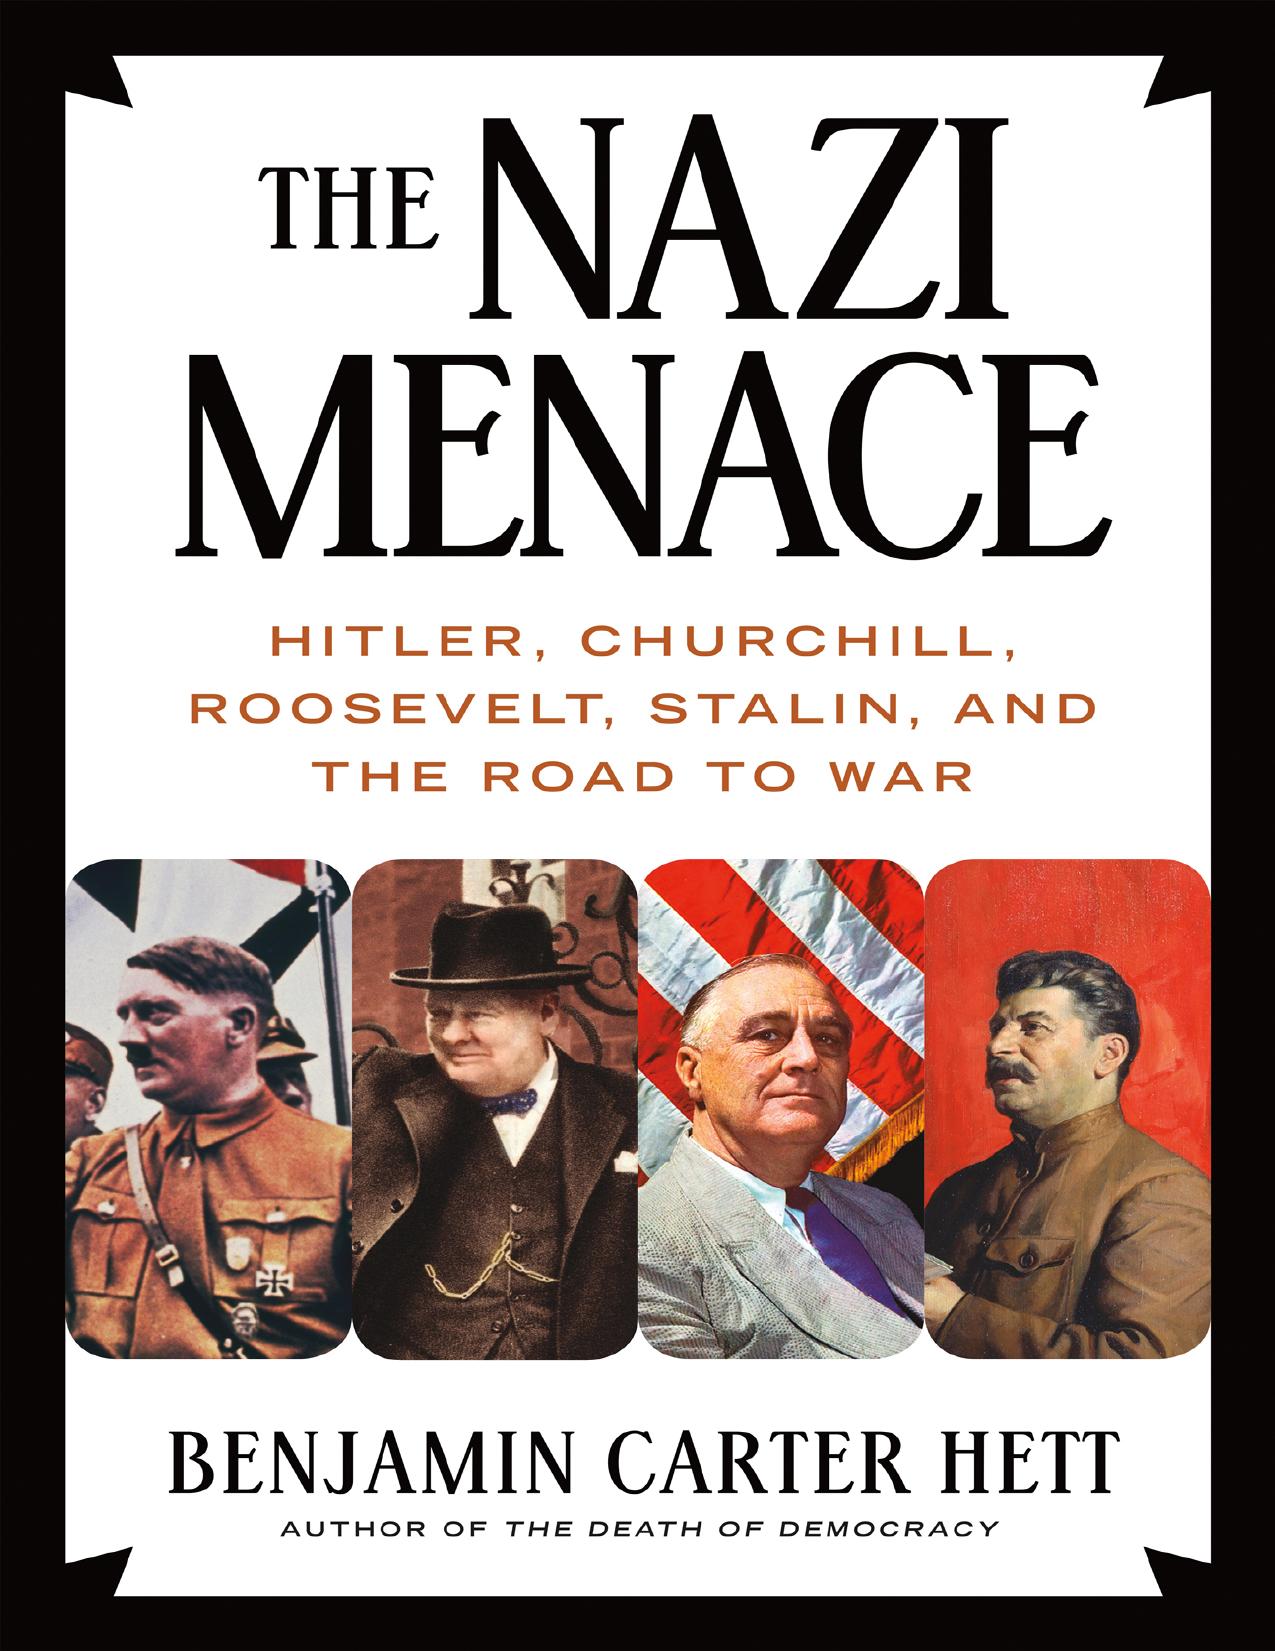 The Nazi Menace by Benjamin Carter Hett